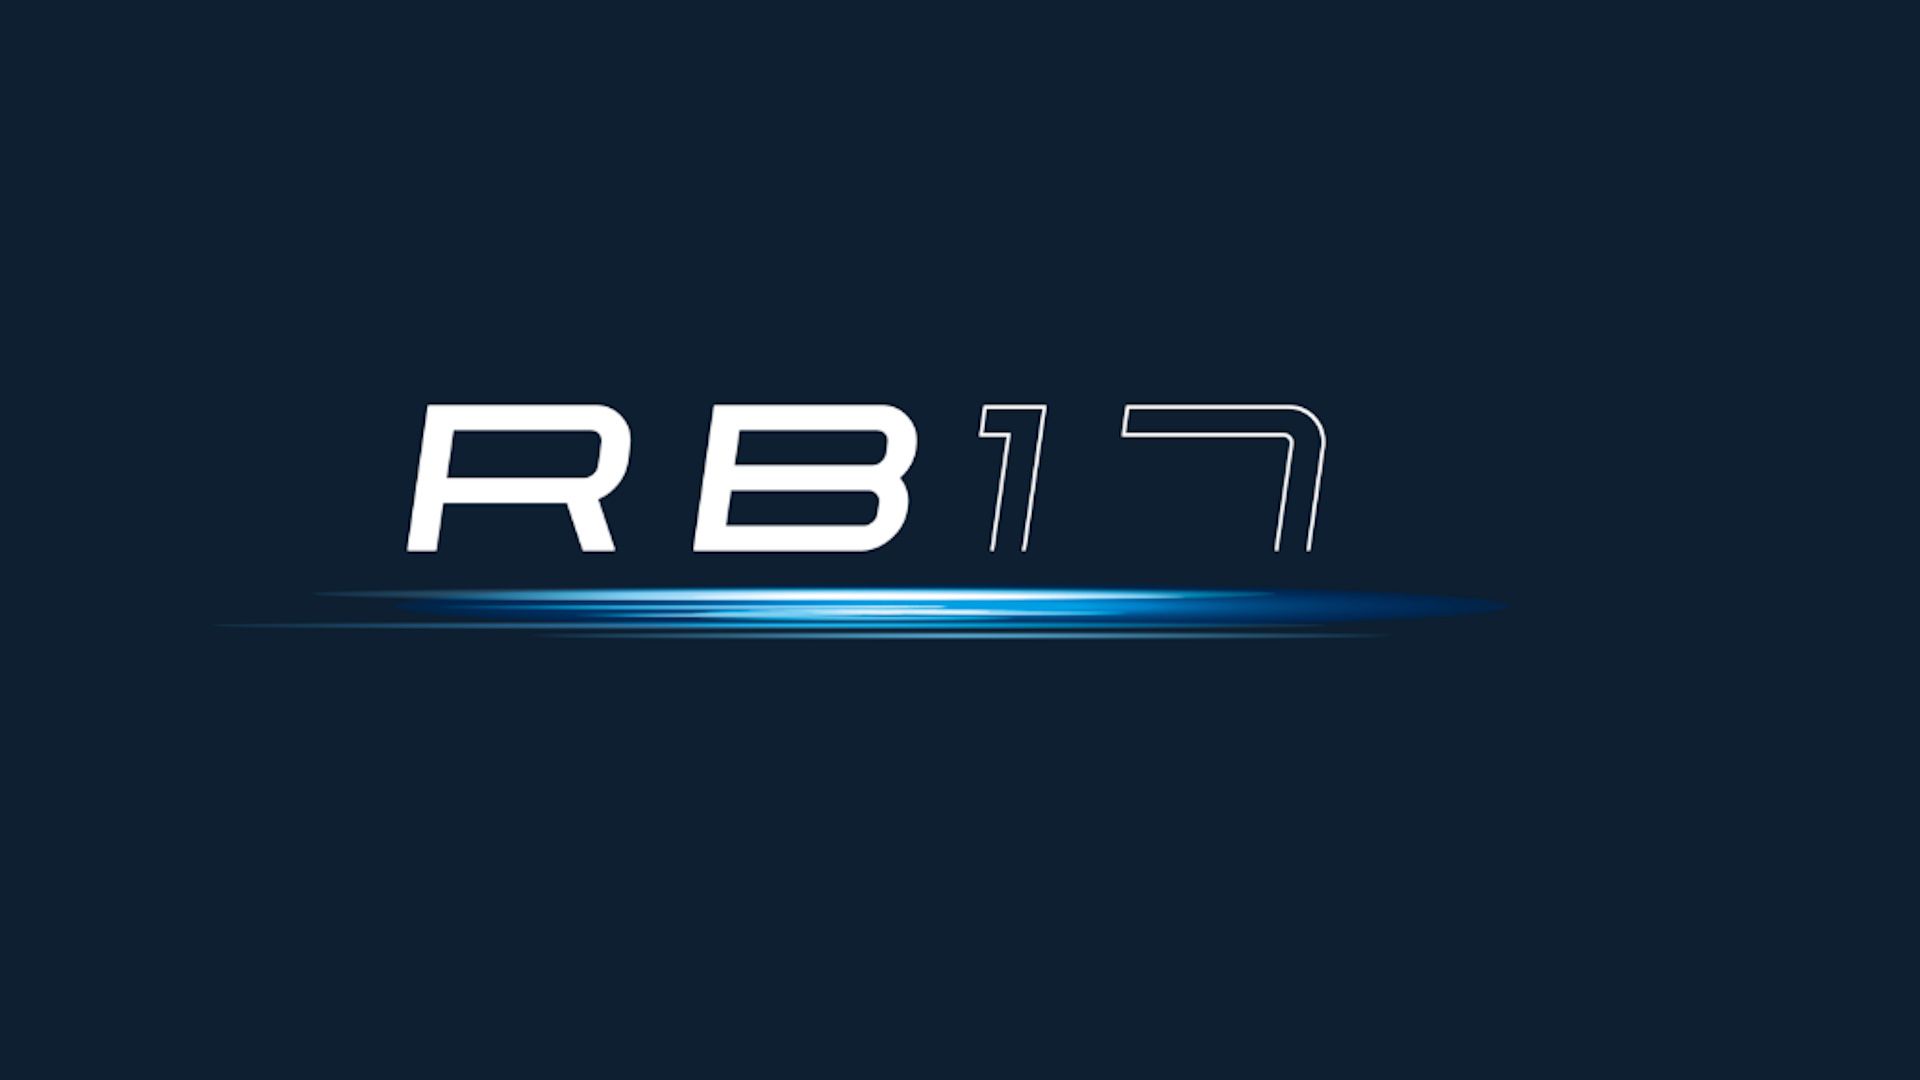 RB17 |  Red Bull Racing confirma un superdeportivo de 1.100 CV para 2025